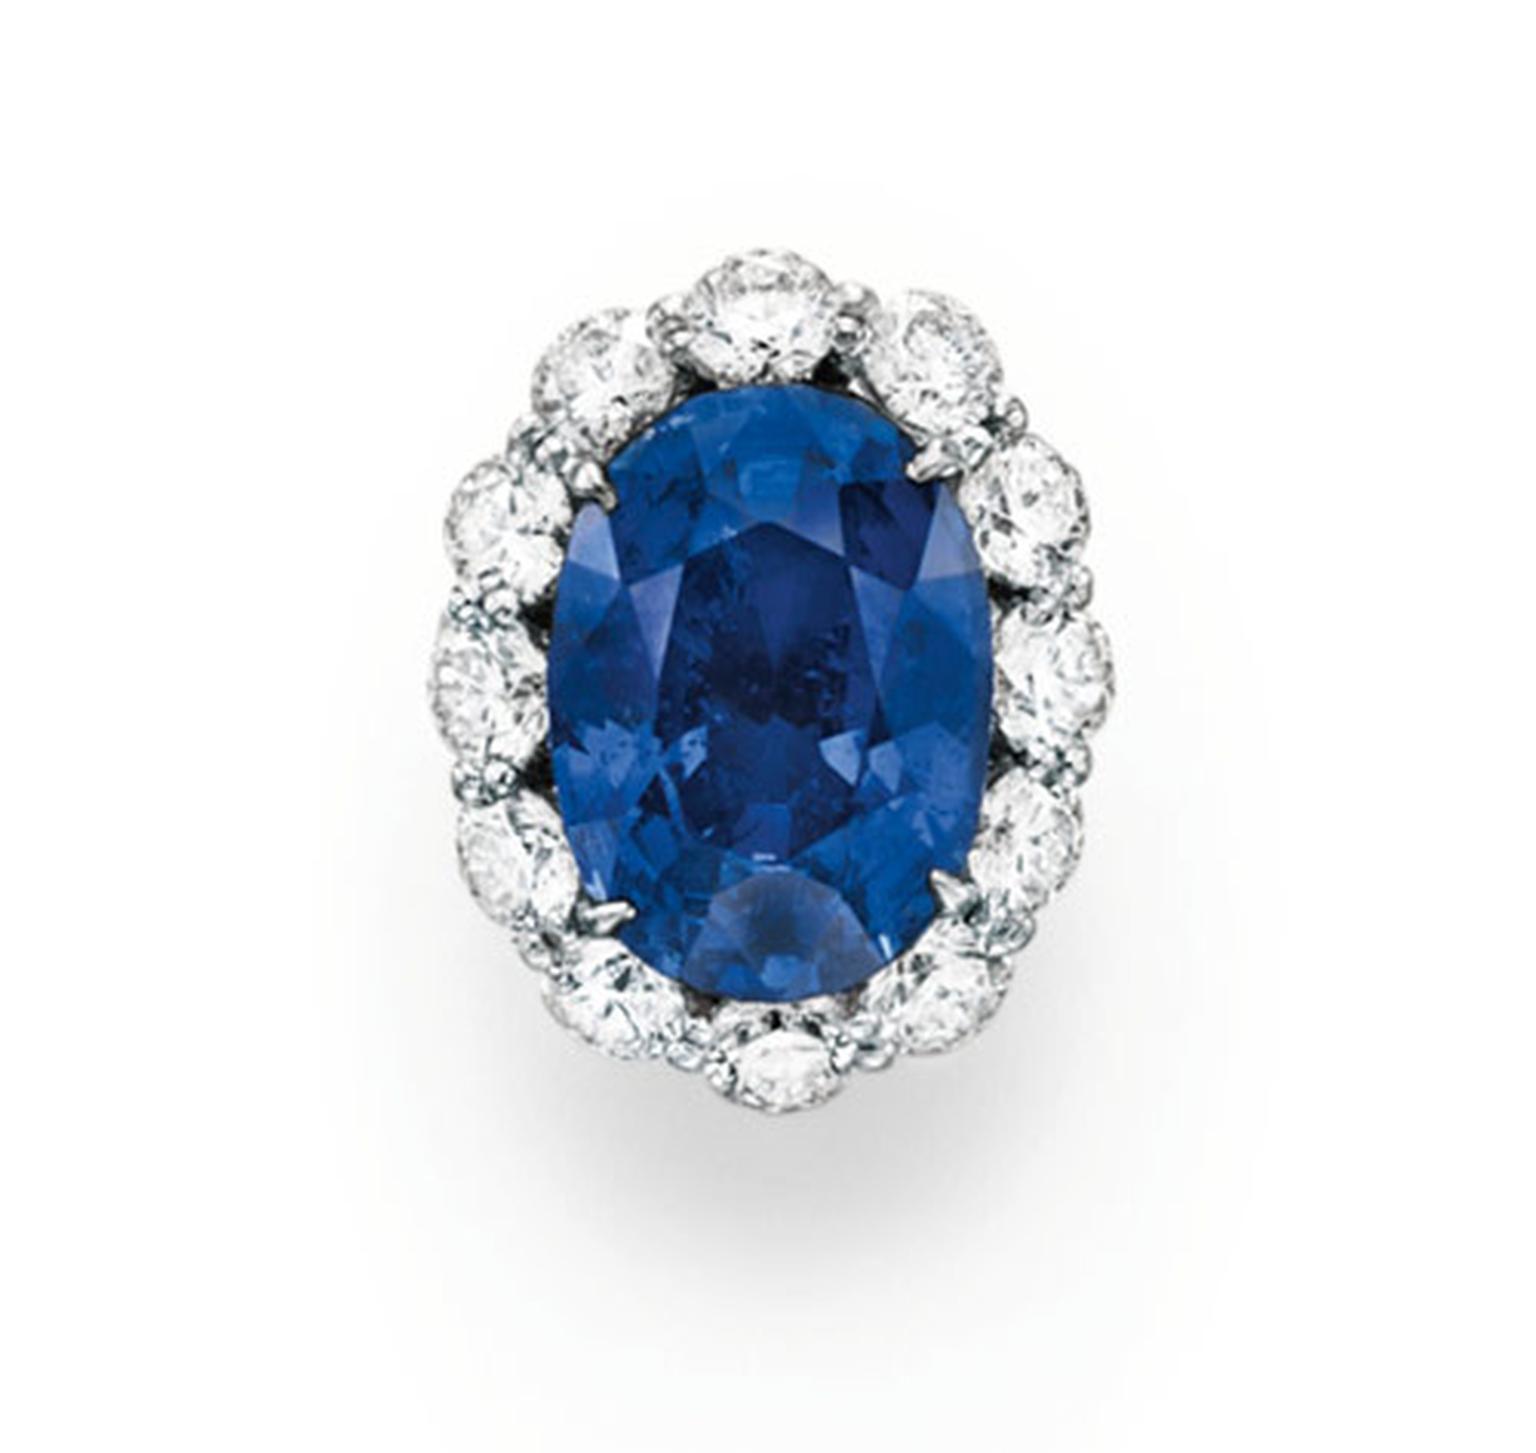 Christies-Oval-Cut-Burmese-Sapphire-Diamond-Ring